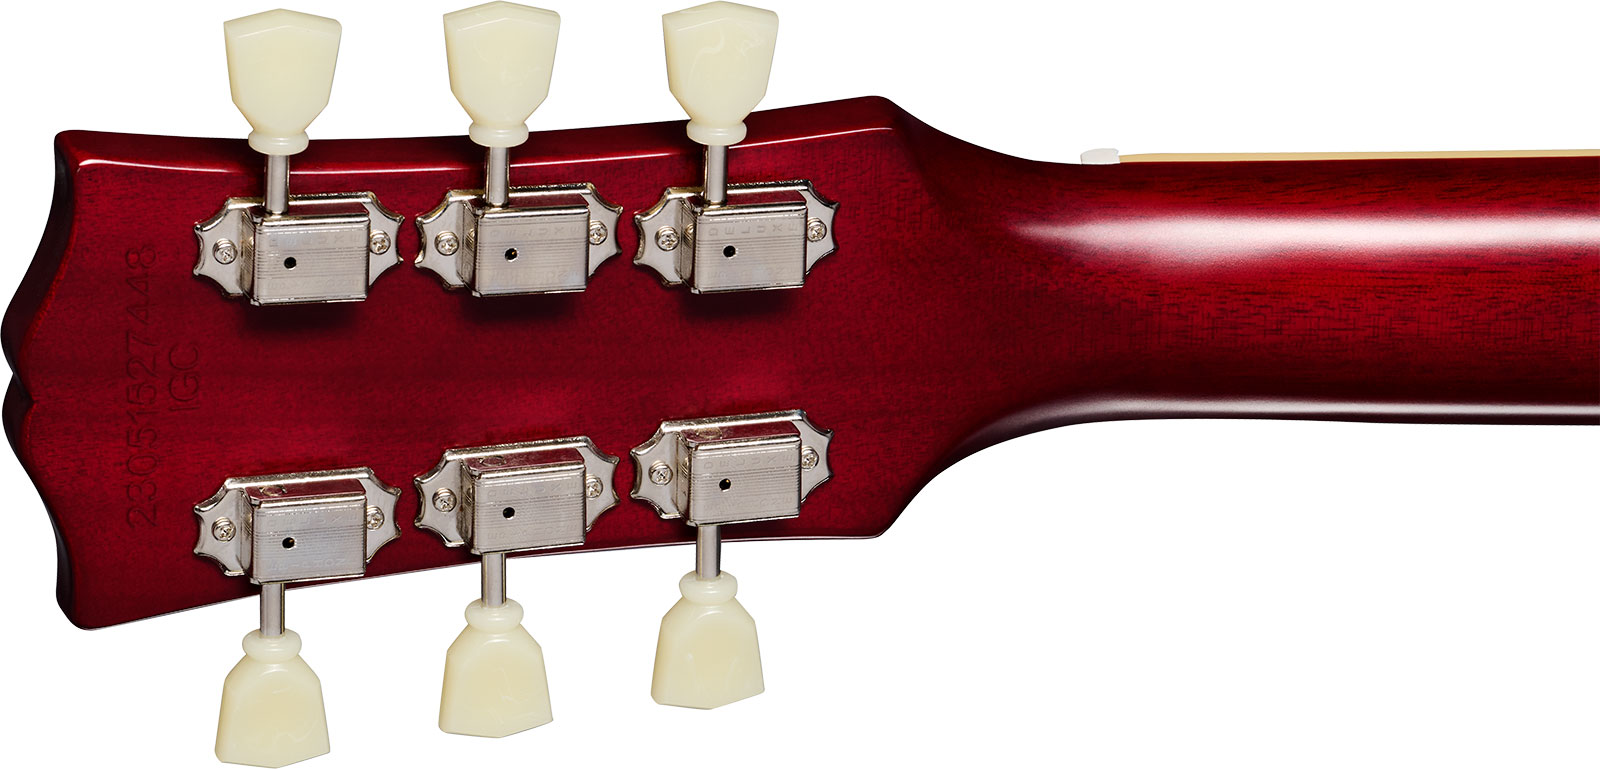 Epiphone 1959 Les Paul Standard Inspired By 2h Gibson Ht Lau - Vos Factory Burst - Single-Cut-E-Gitarre - Variation 4